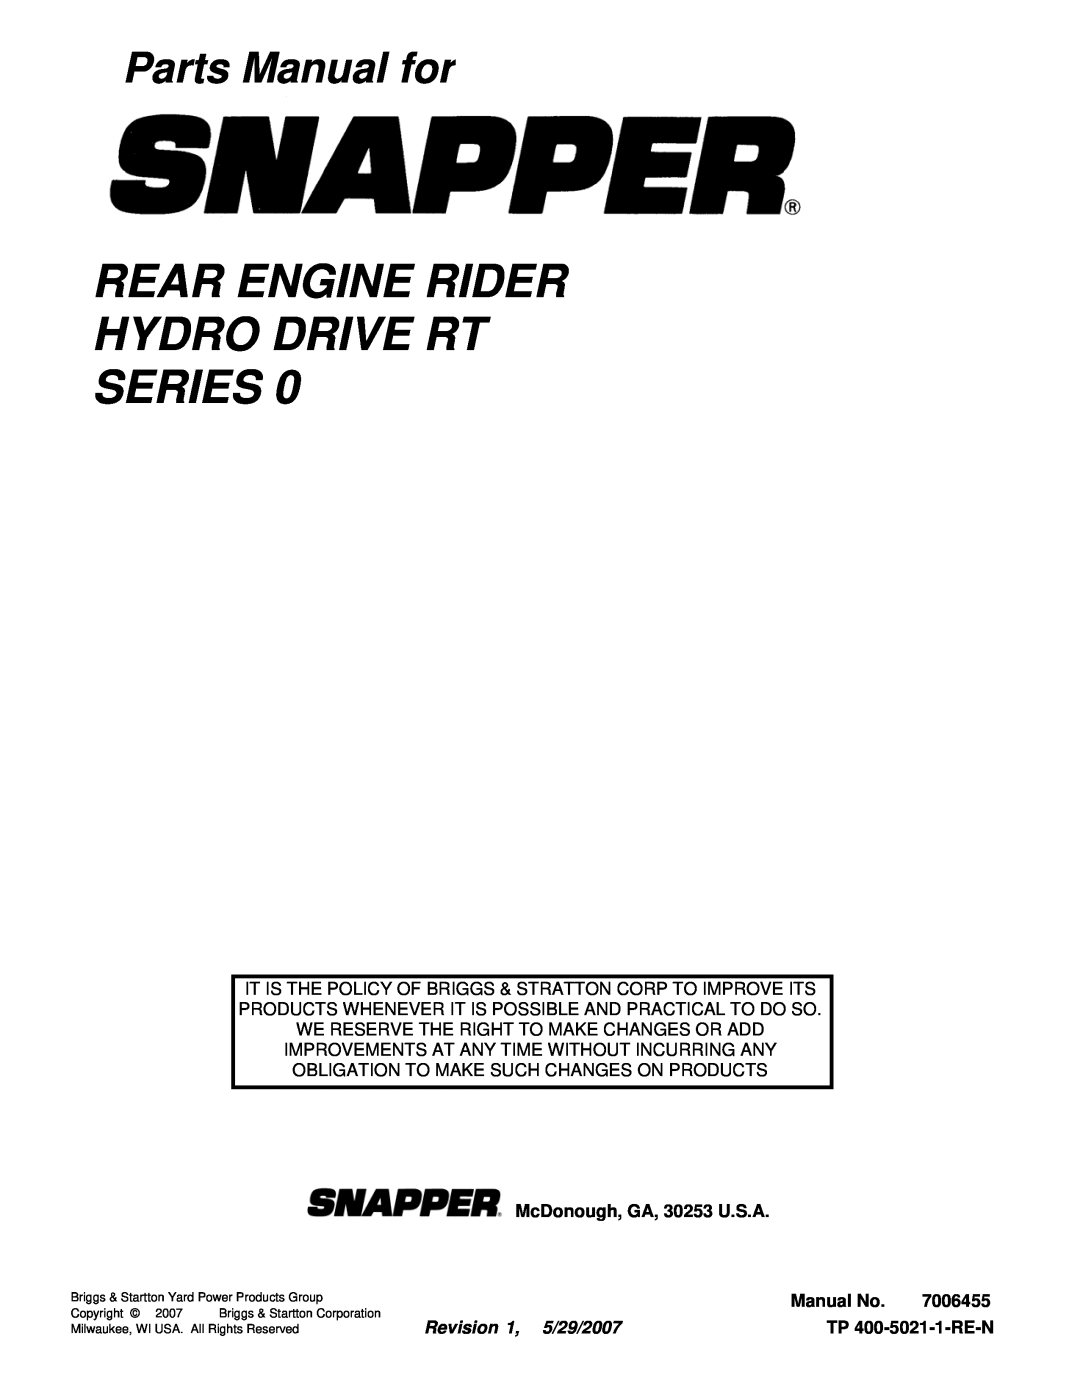 Snapper RT1330E Rear Engine Rider Hydro Drive Rt Series, Parts Manual for, McDonough, GA, 30253 U.S.A, Manual No, 7006455 